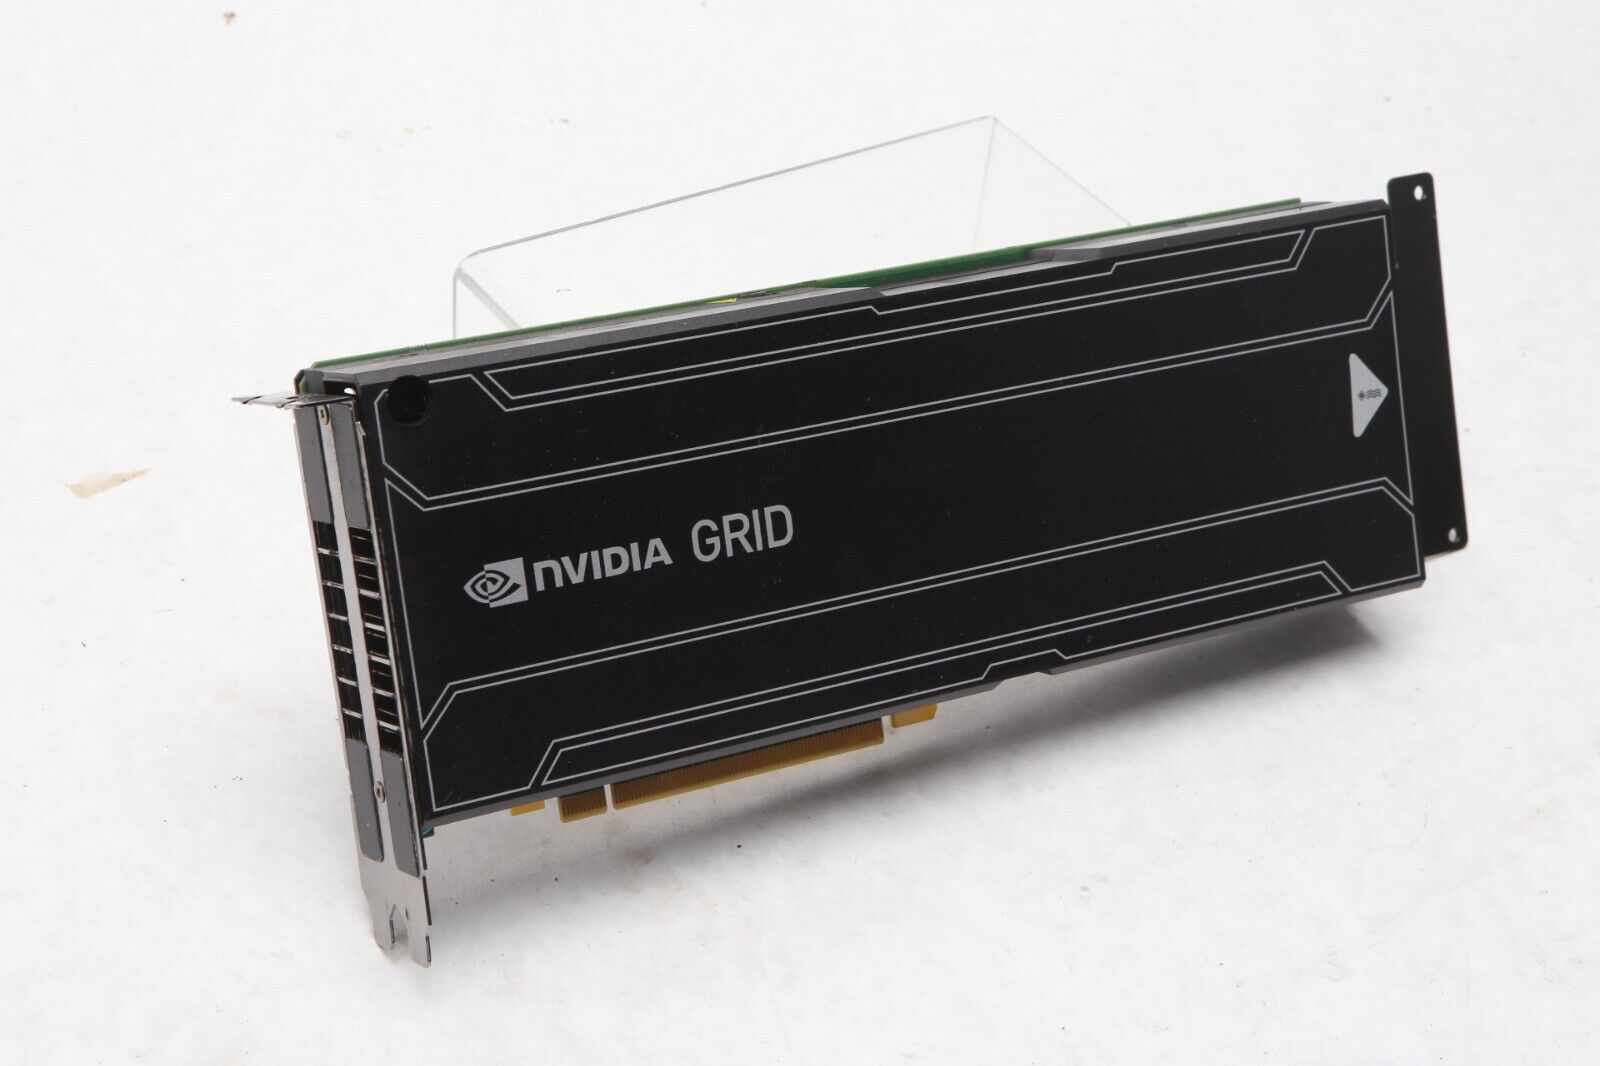 HP HPe 732635-001 NVIDIA Grid K2 PCIE GPU Dual Graphics Card G43